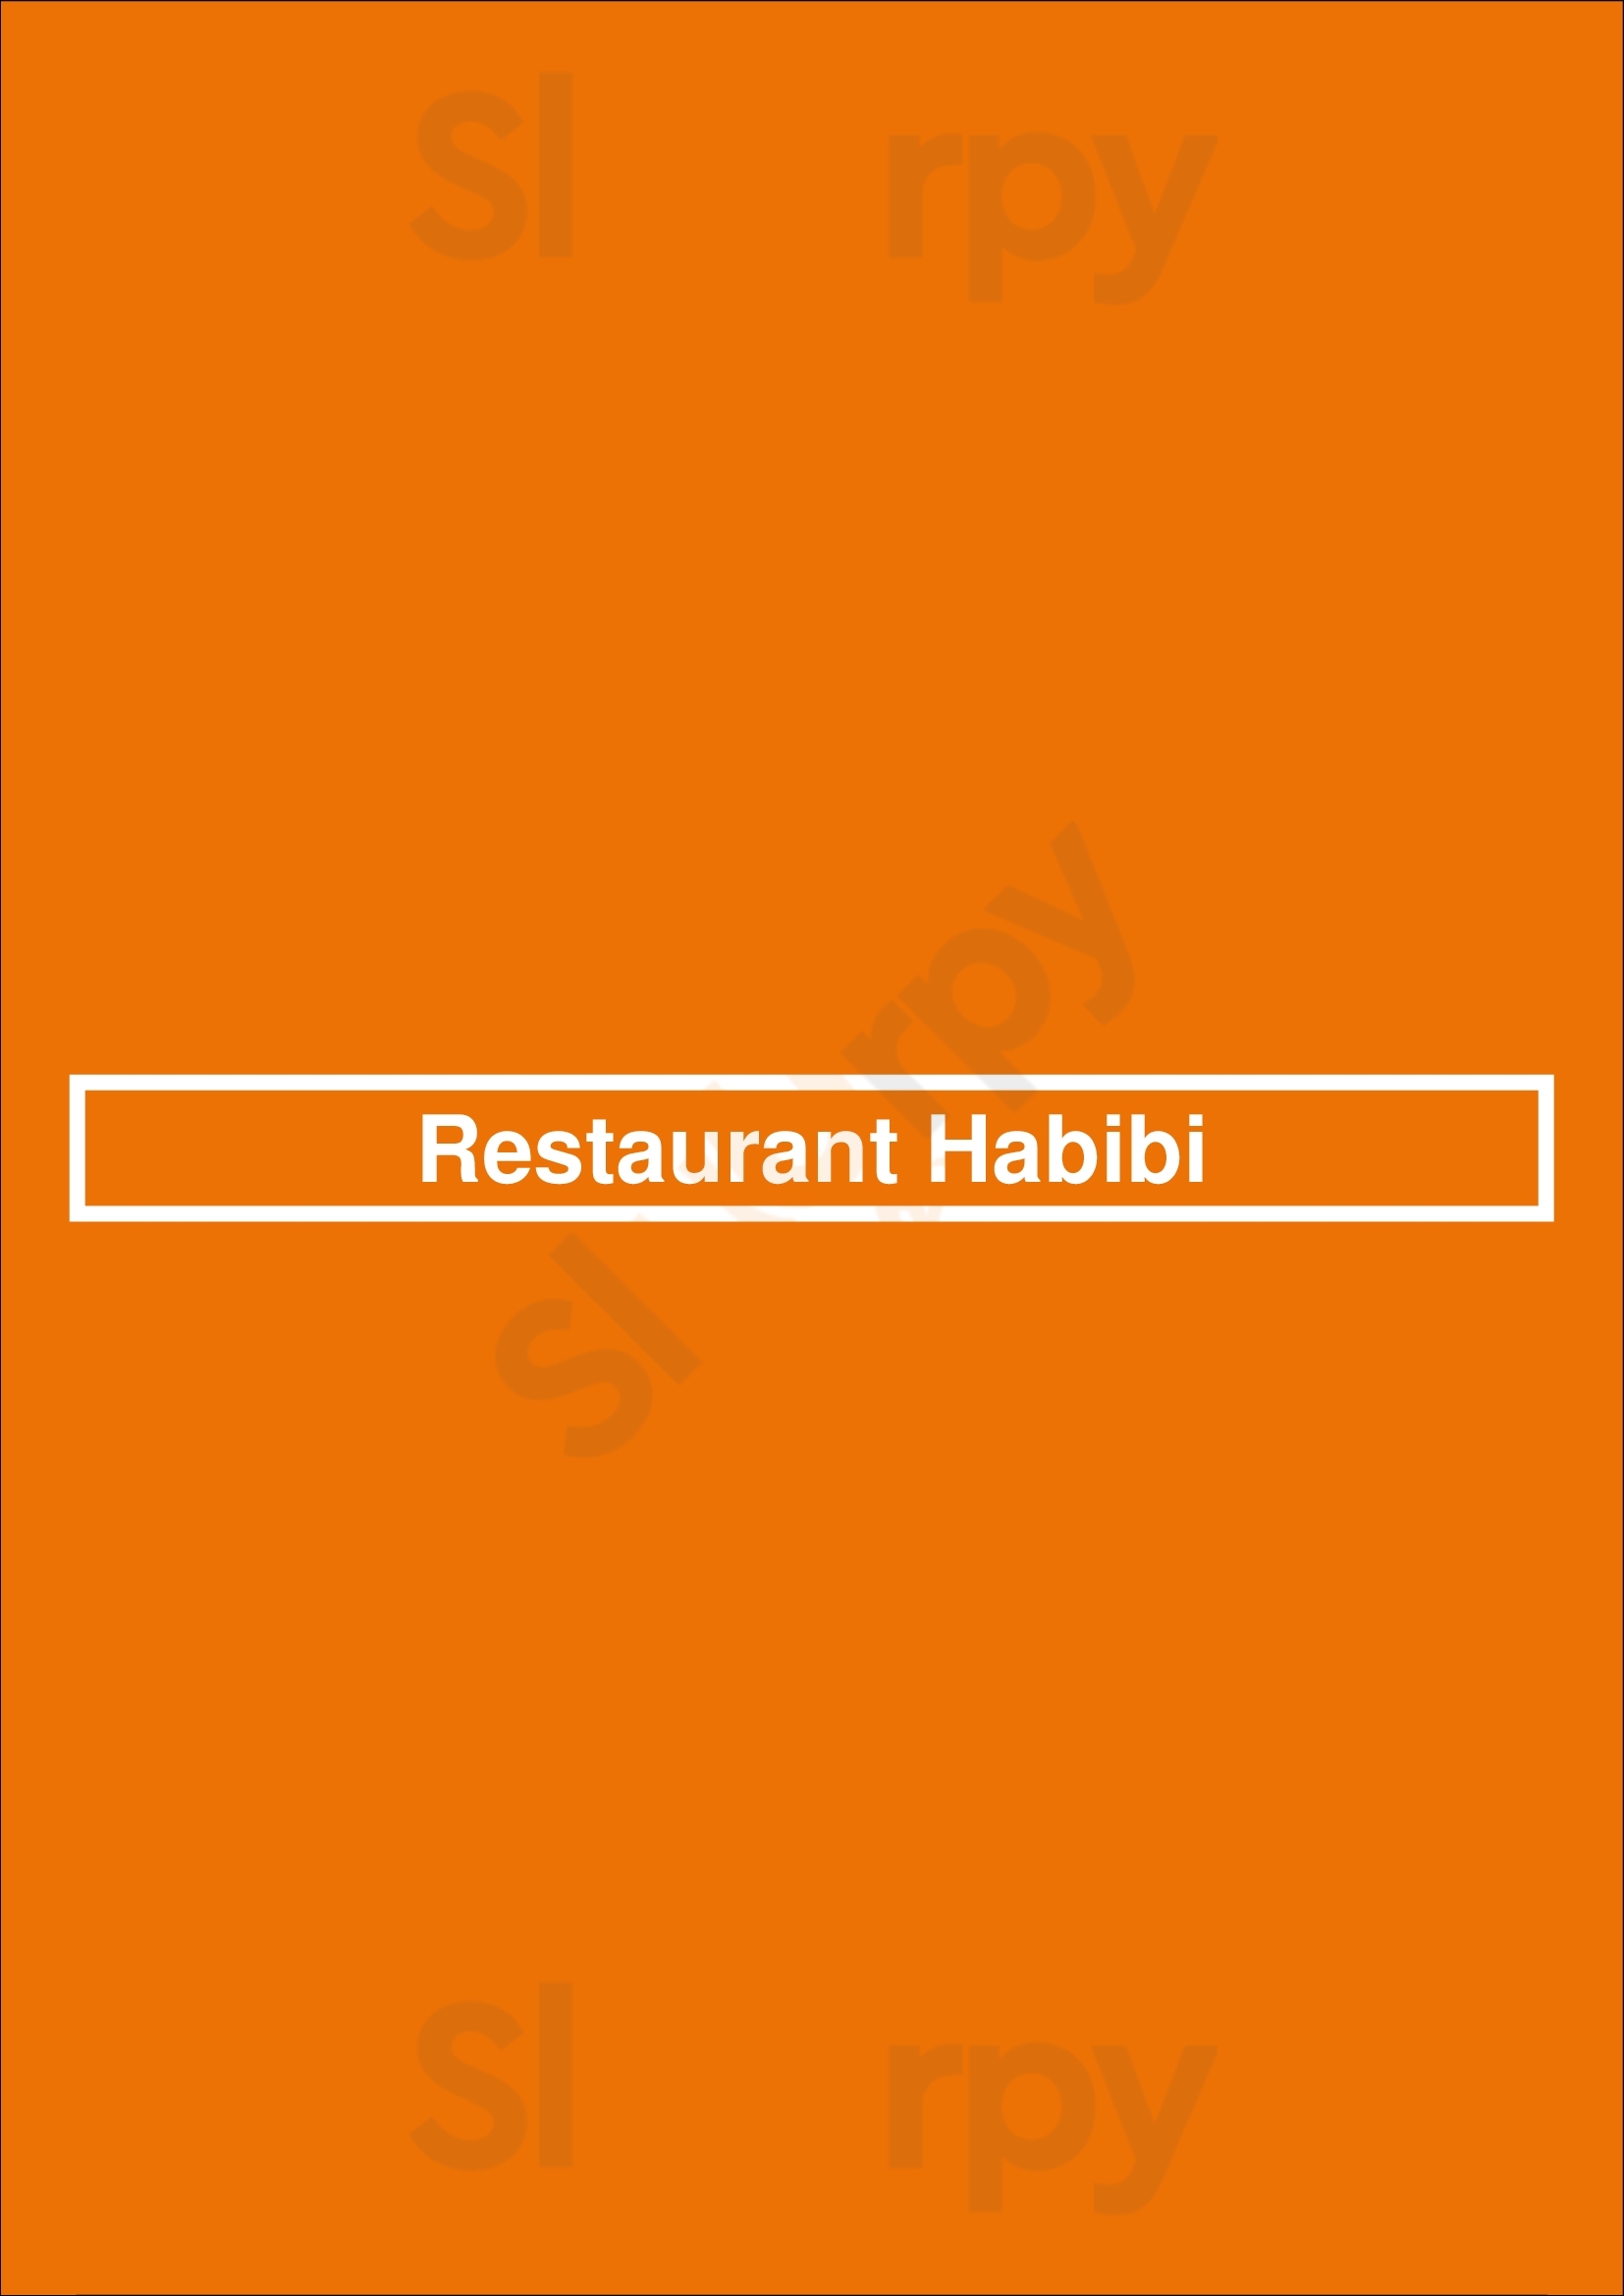 Restaurant Habibi Rotterdam Menu - 1